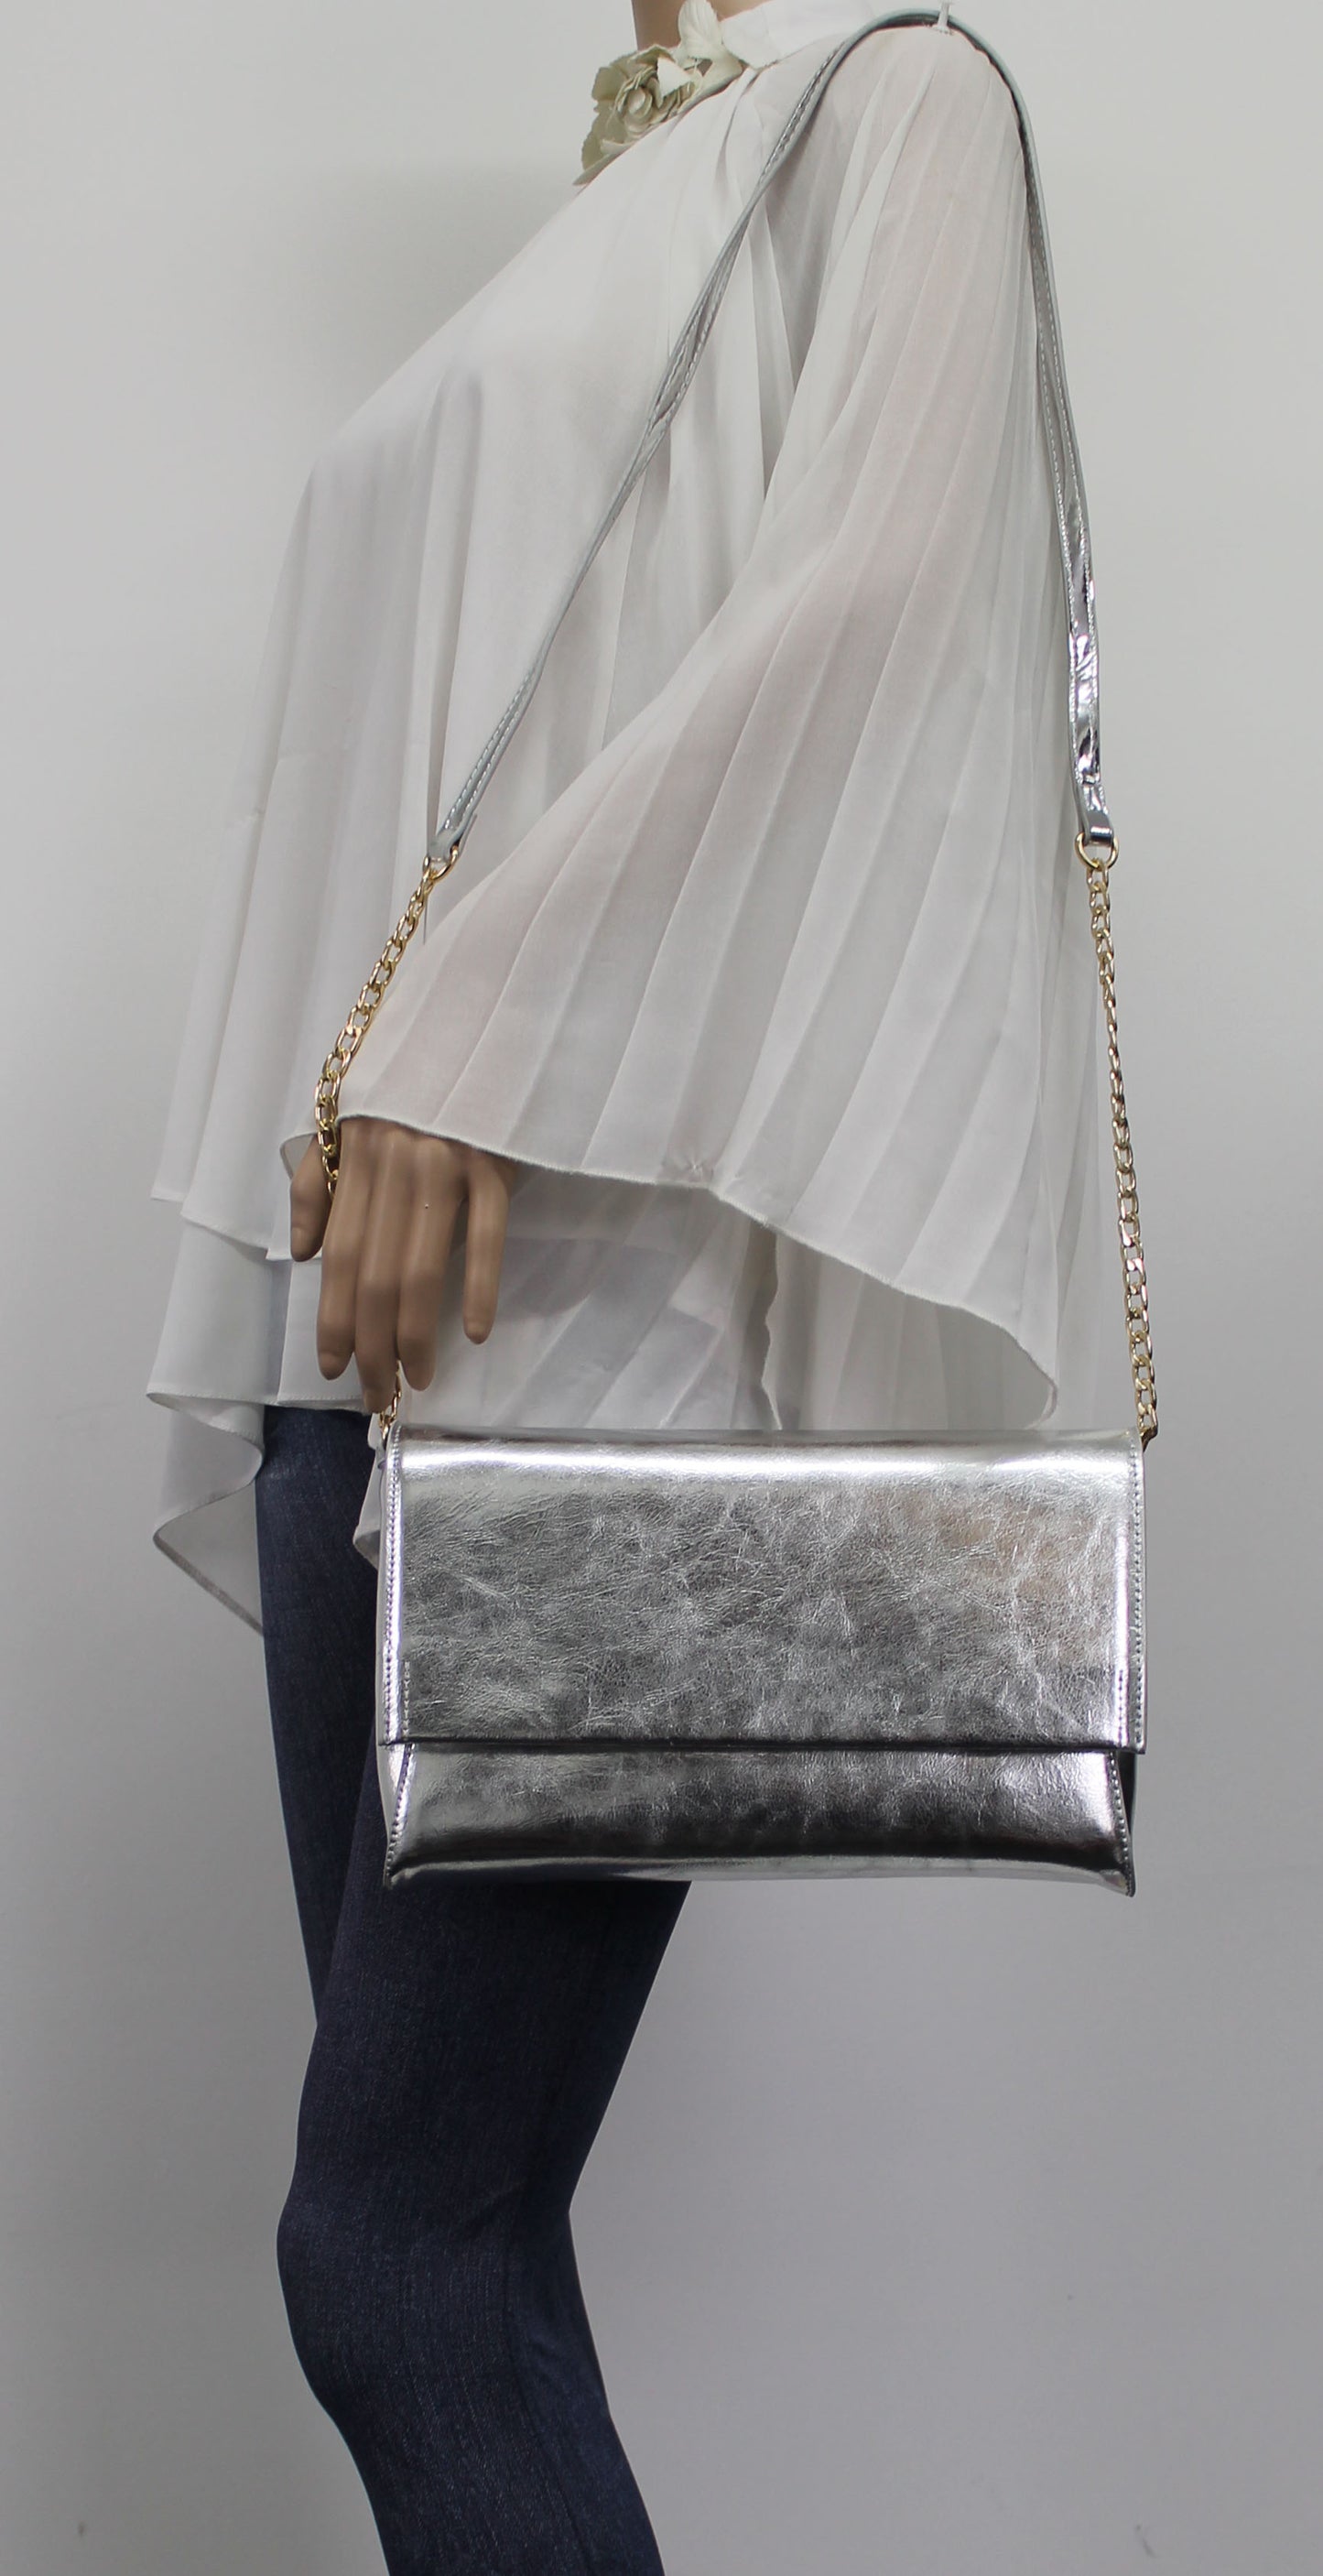 SWANKYSWANS Jenna Clutch Bag Silver Cute Cheap Clutch Bag For Weddings School and Work